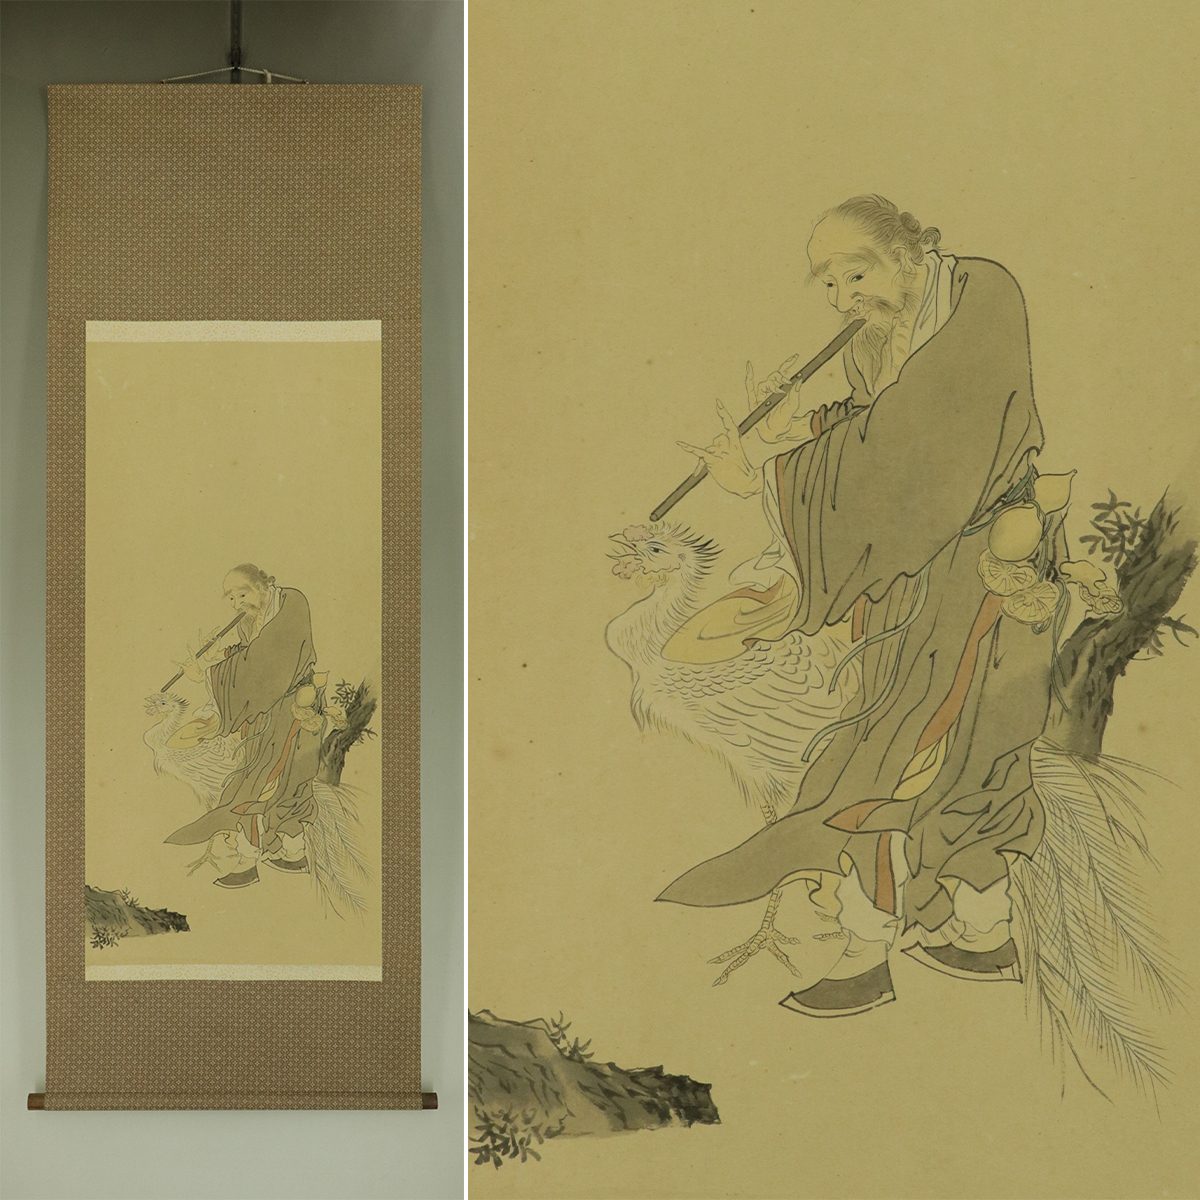 [Hand-painted] Old painting [Kujaku Sennin] ◆Paper book◆Hanging scroll u12030b, Painting, Japanese painting, person, Bodhisattva